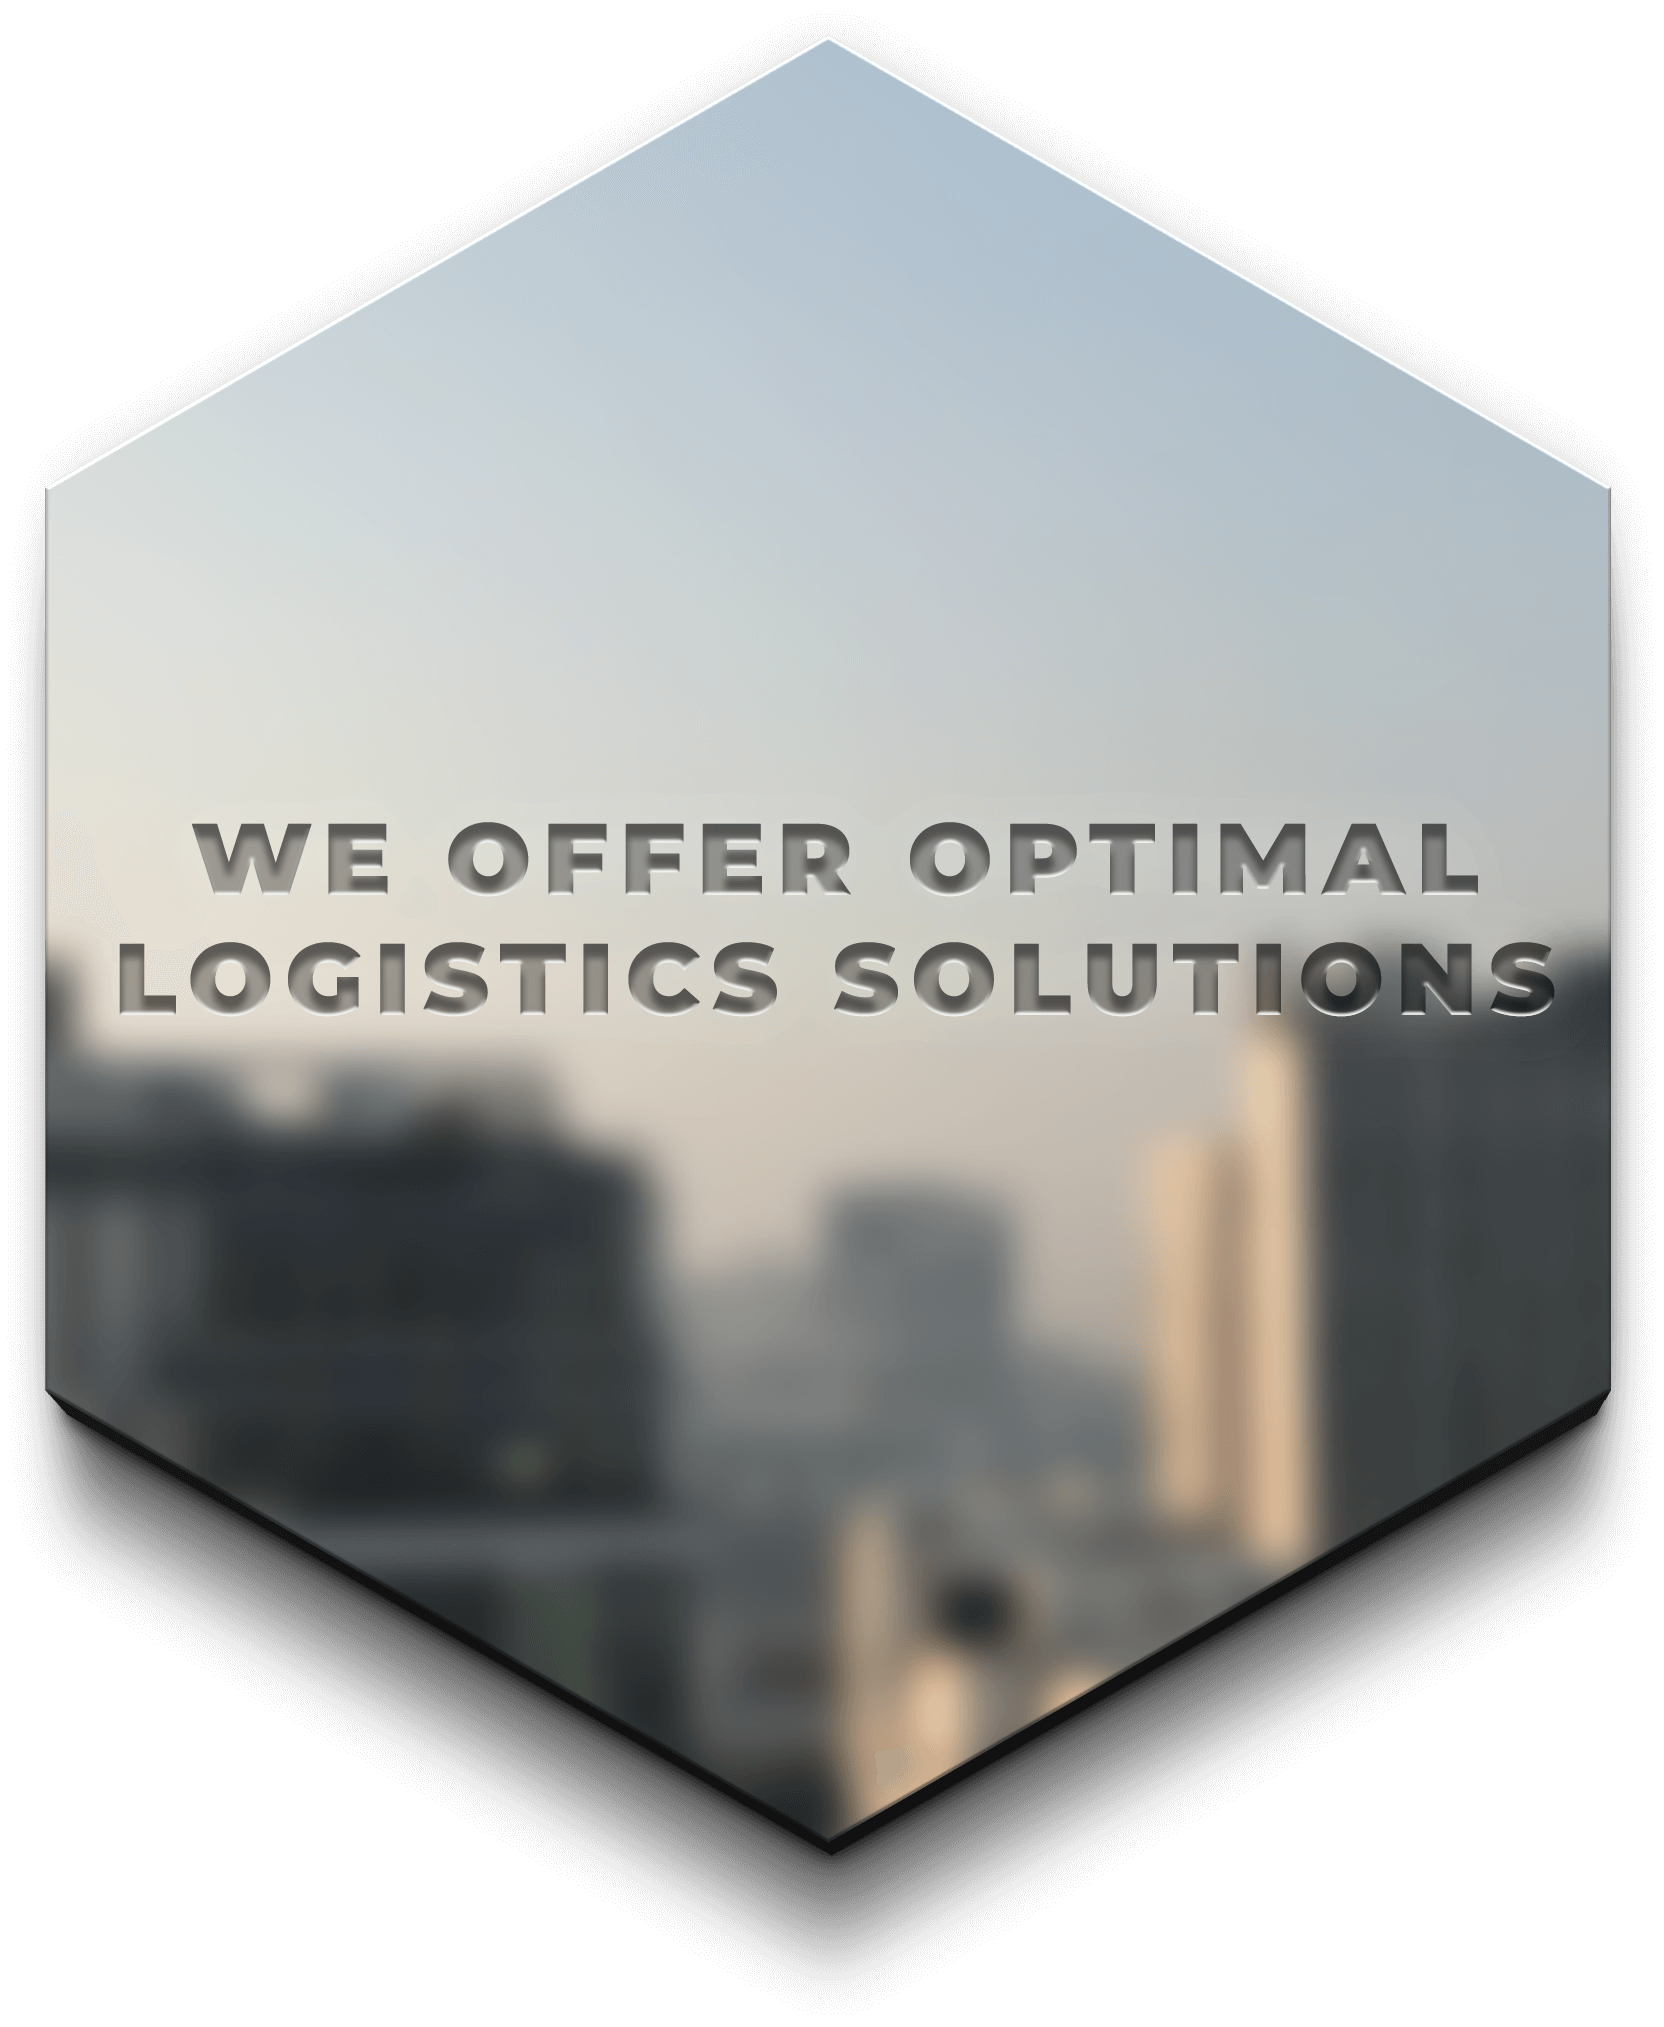 We offer optimal logistics solutions